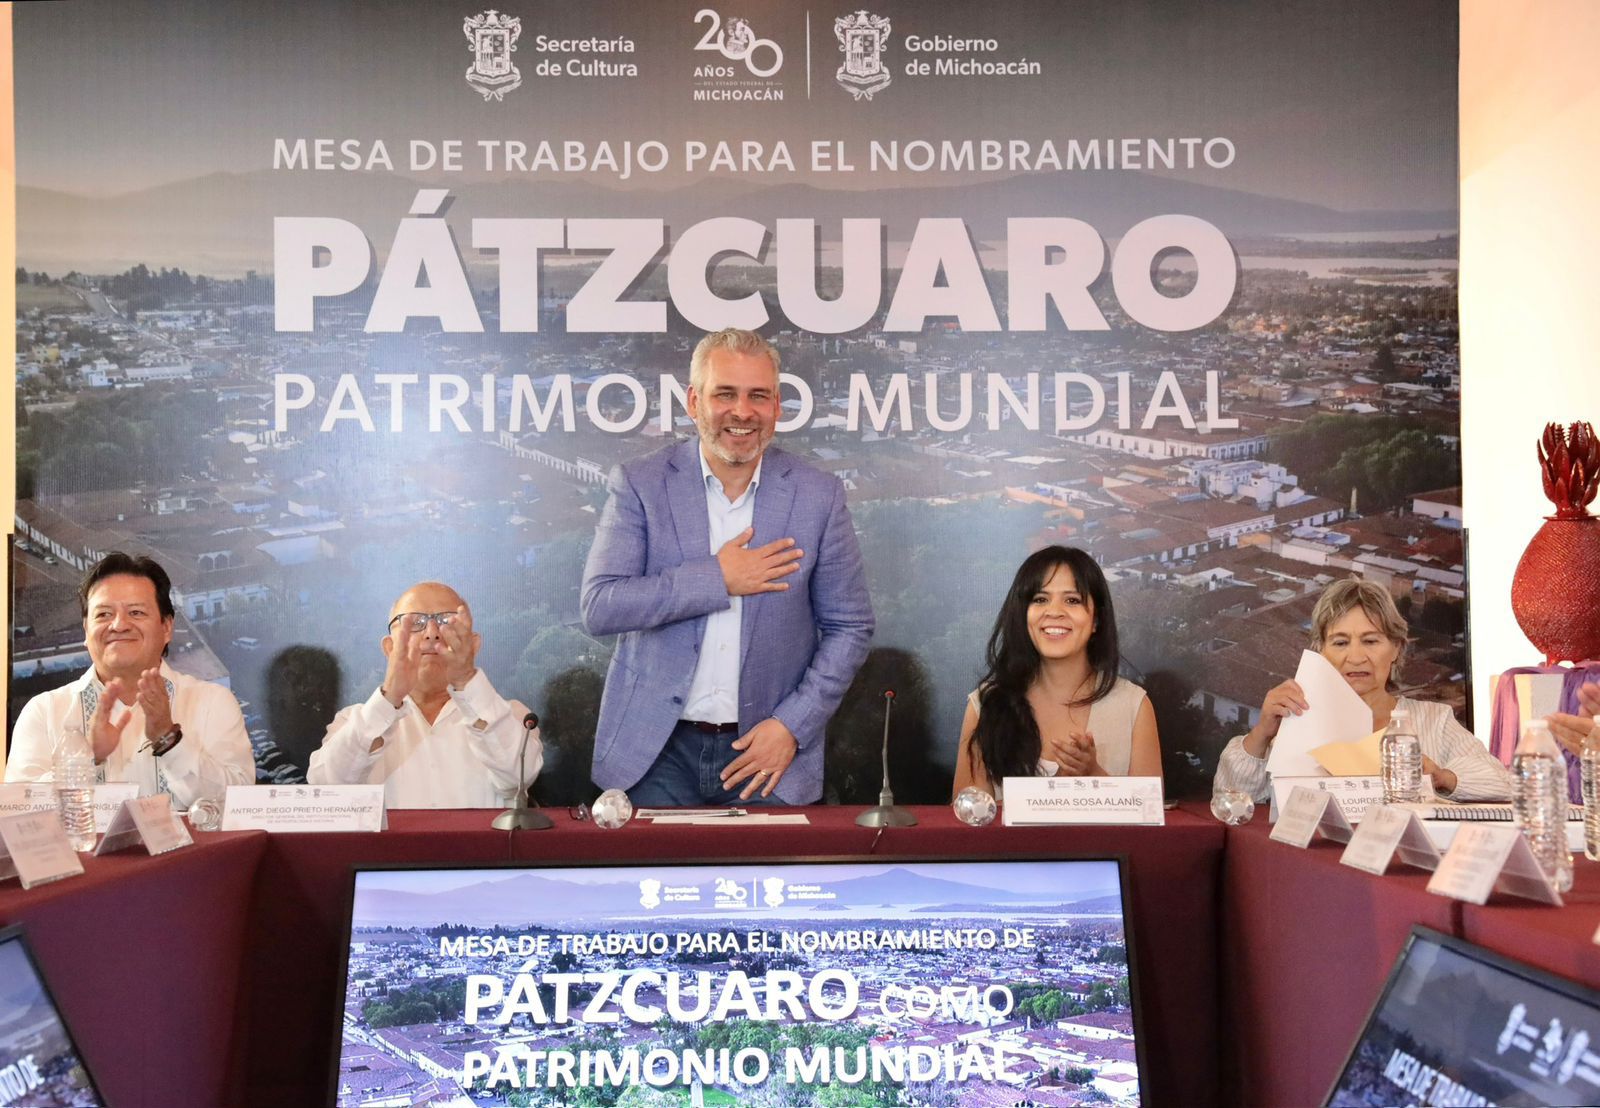 Pátzcuaro se perfila para reconocimiento como Patrimonio Mundial: Bedolla